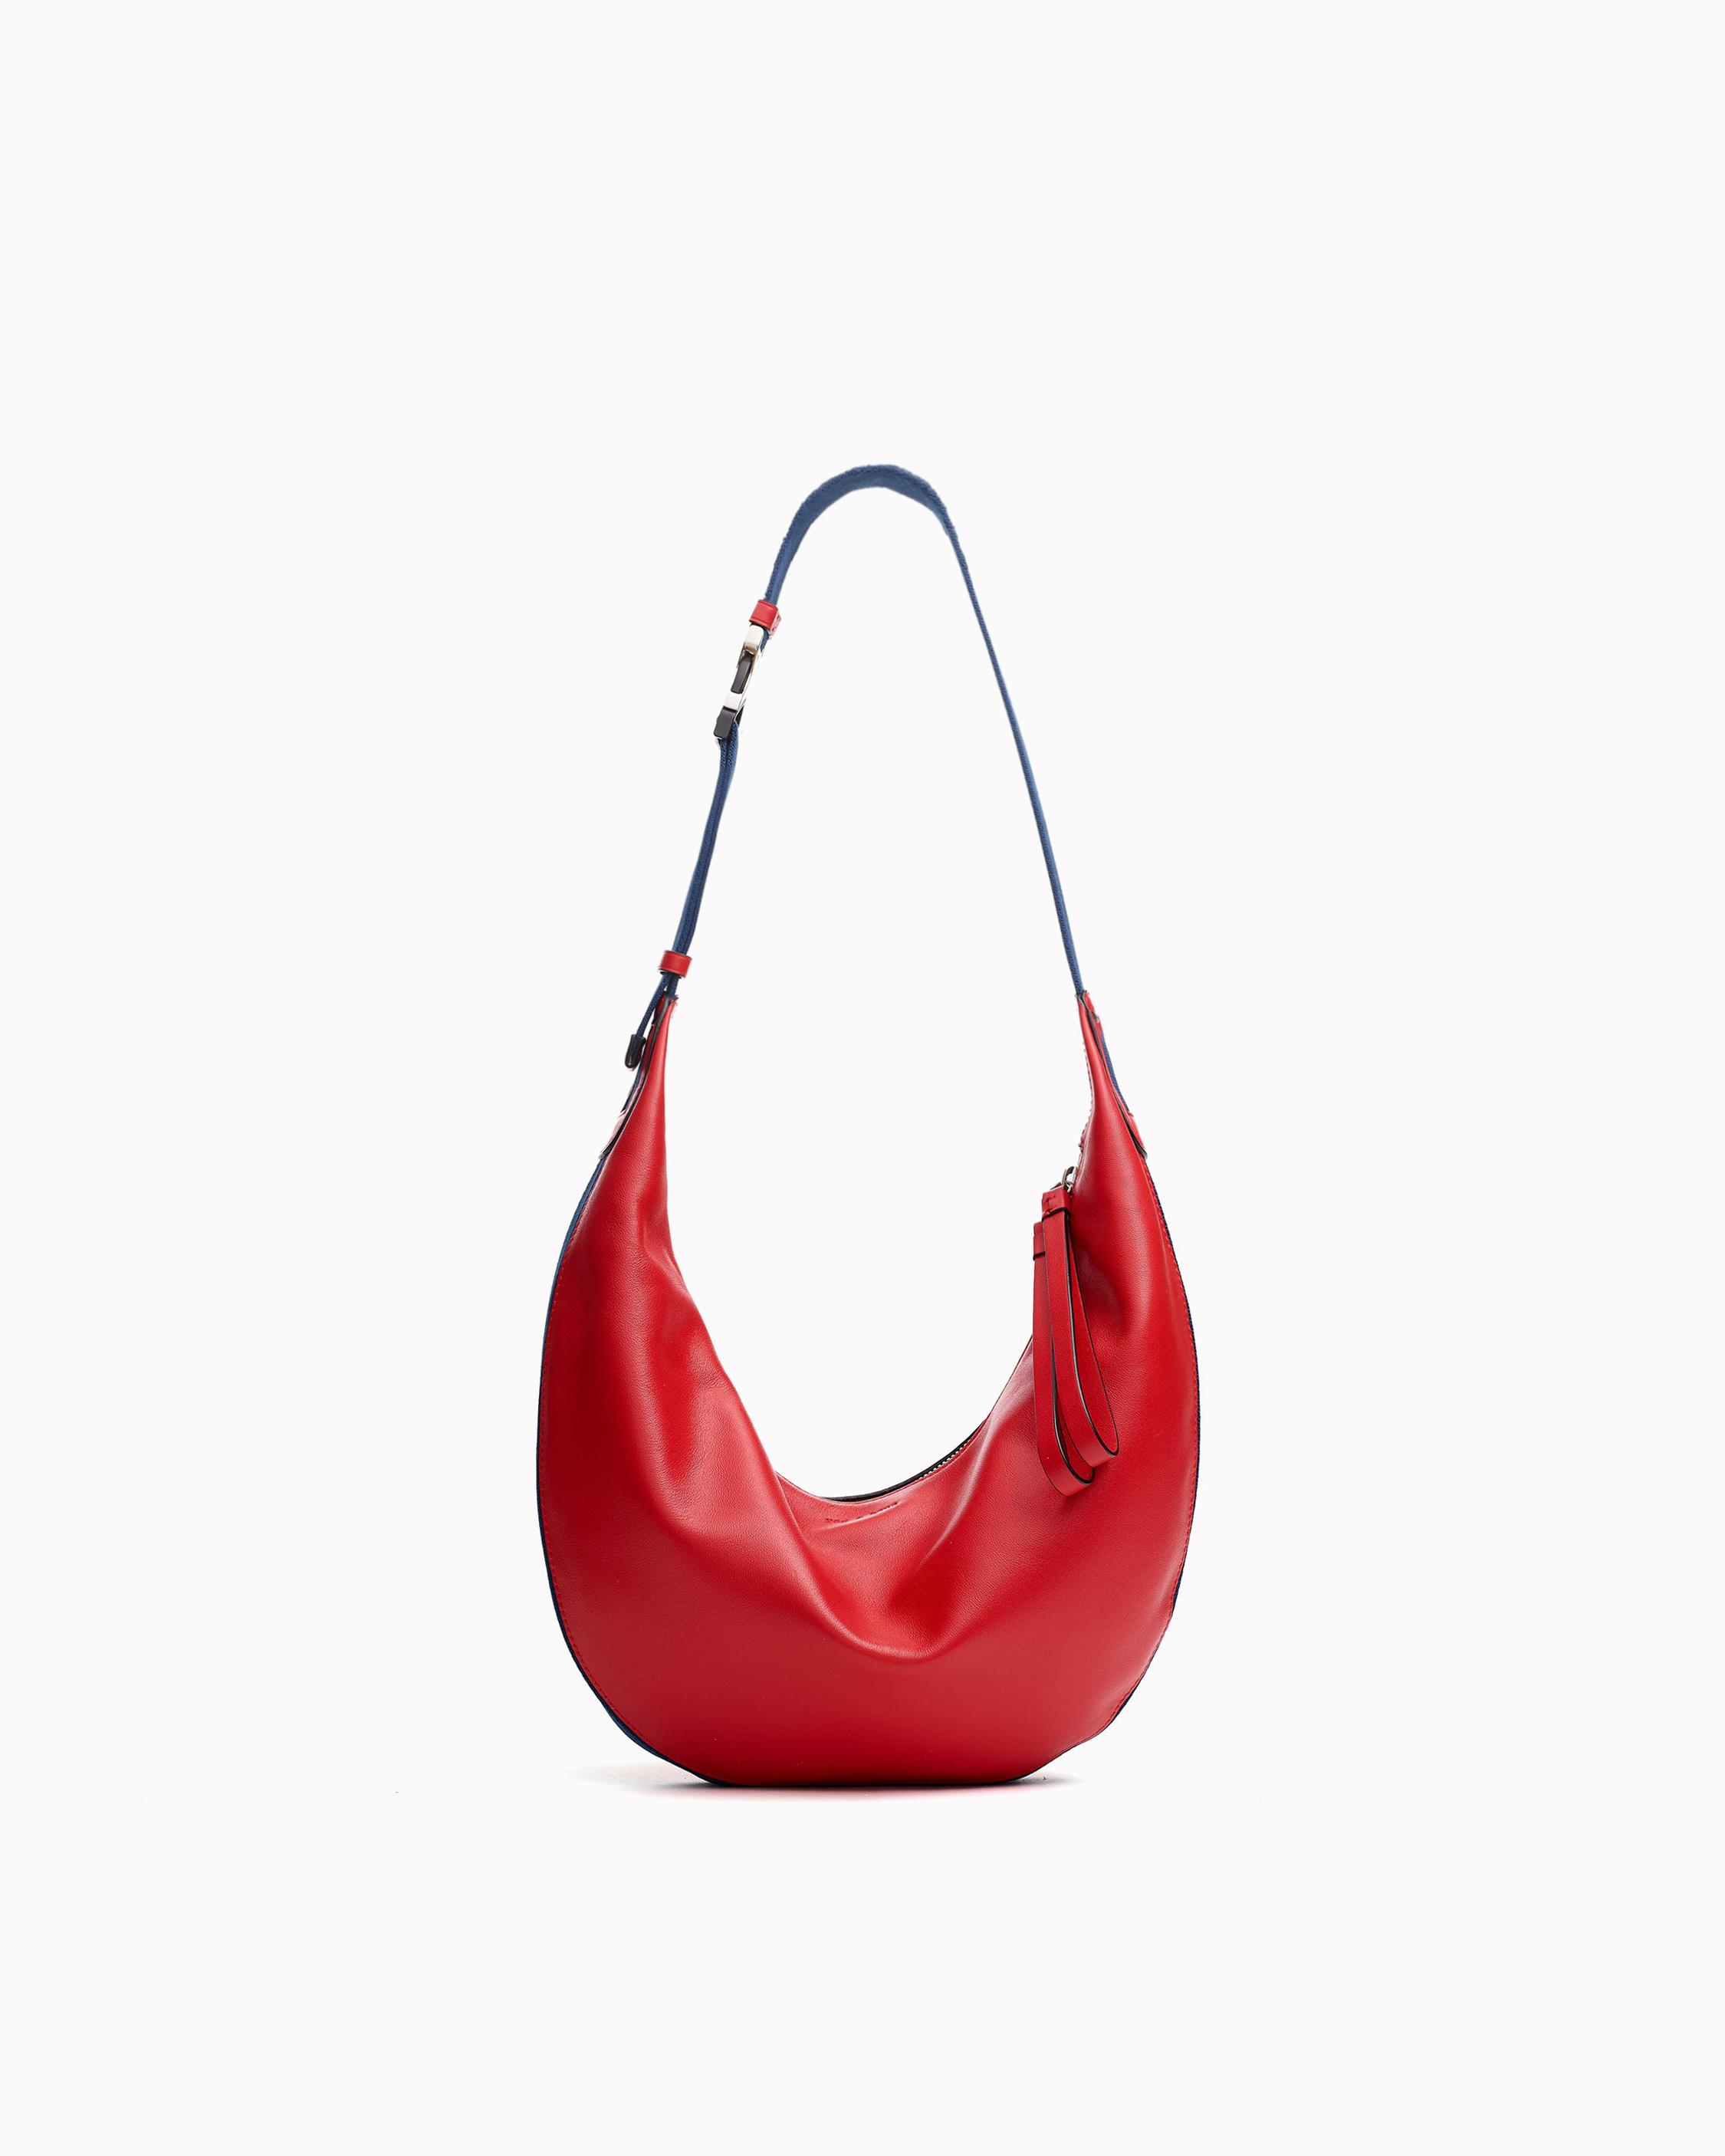 Red Leather Bag Soft Leather Bag Leather Hobo Bag MEDIUM 